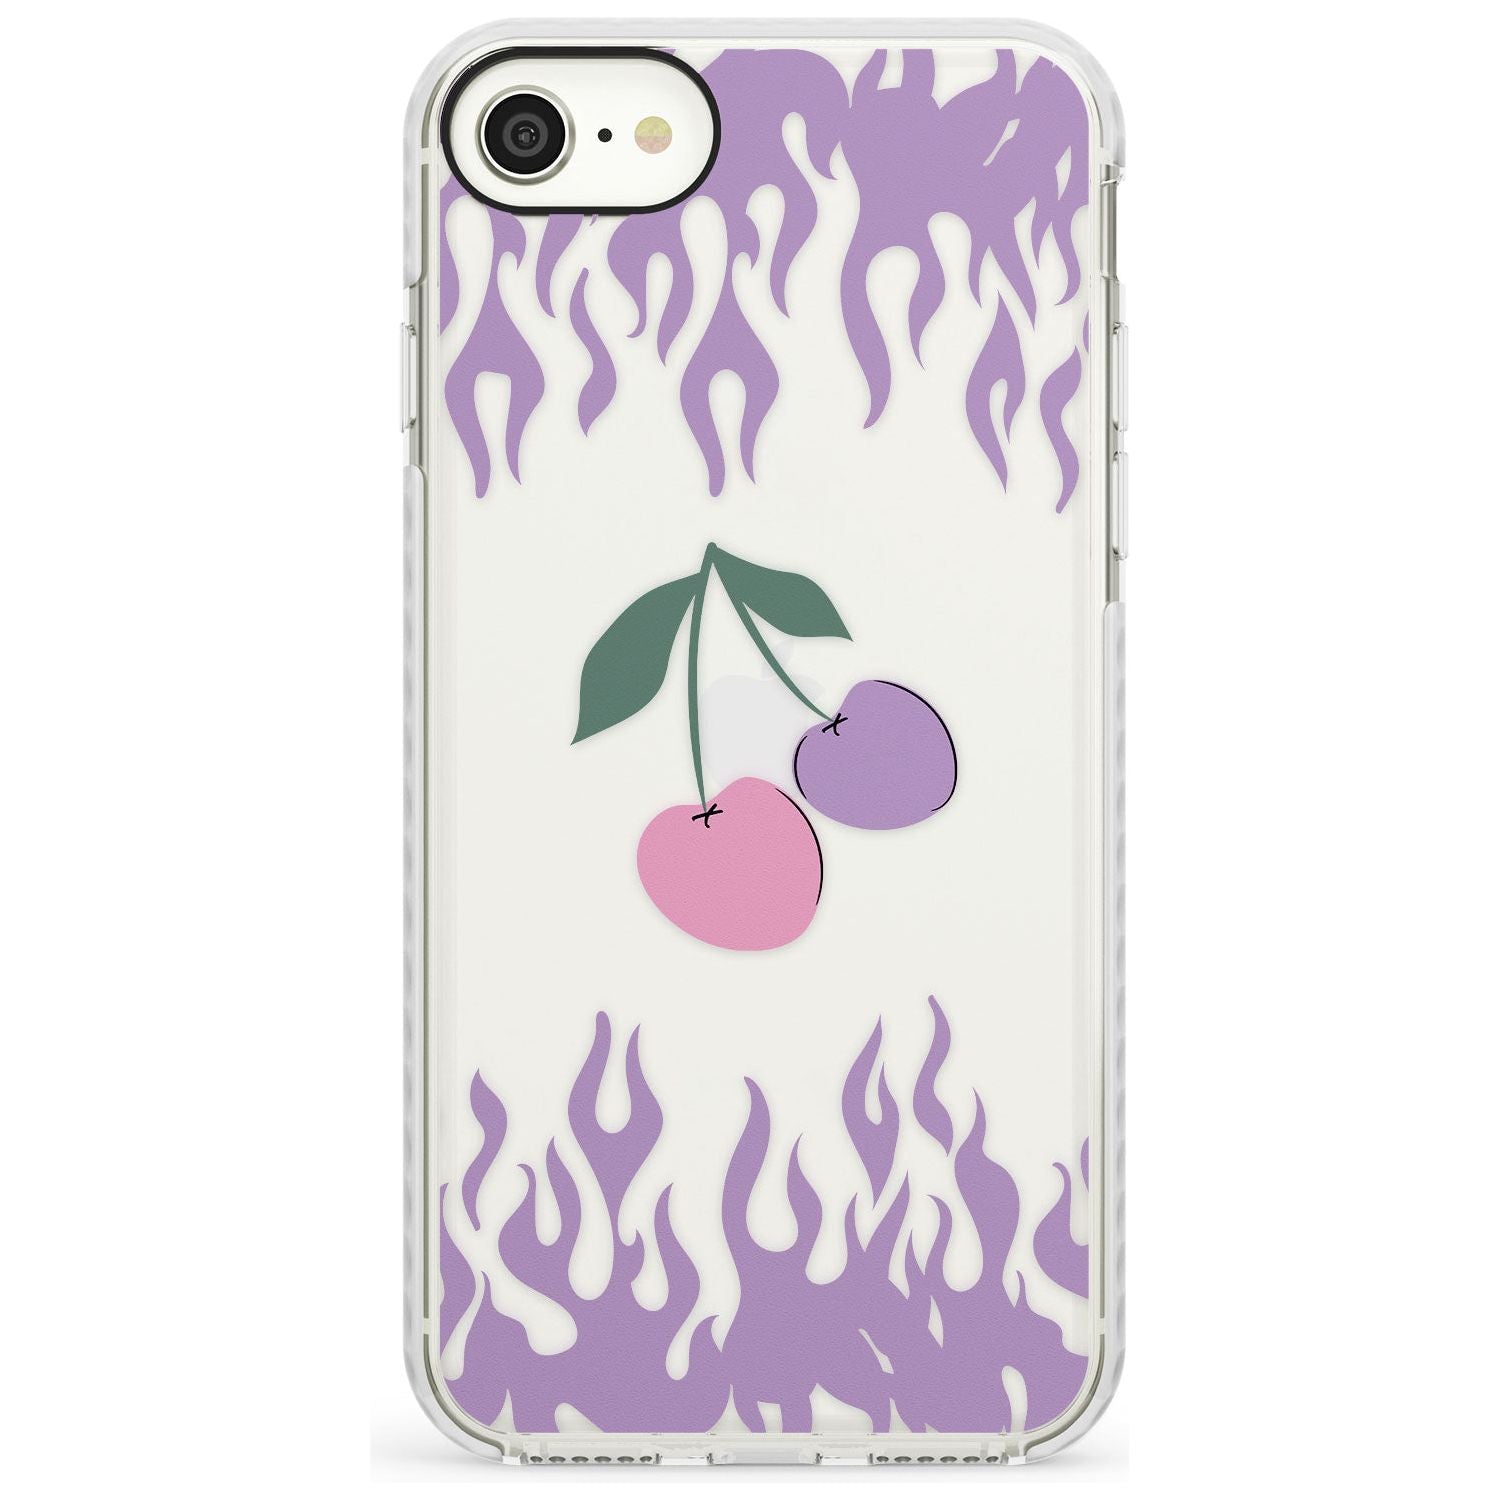 Cherries n' Flames Impact Phone Case for iPhone SE 8 7 Plus